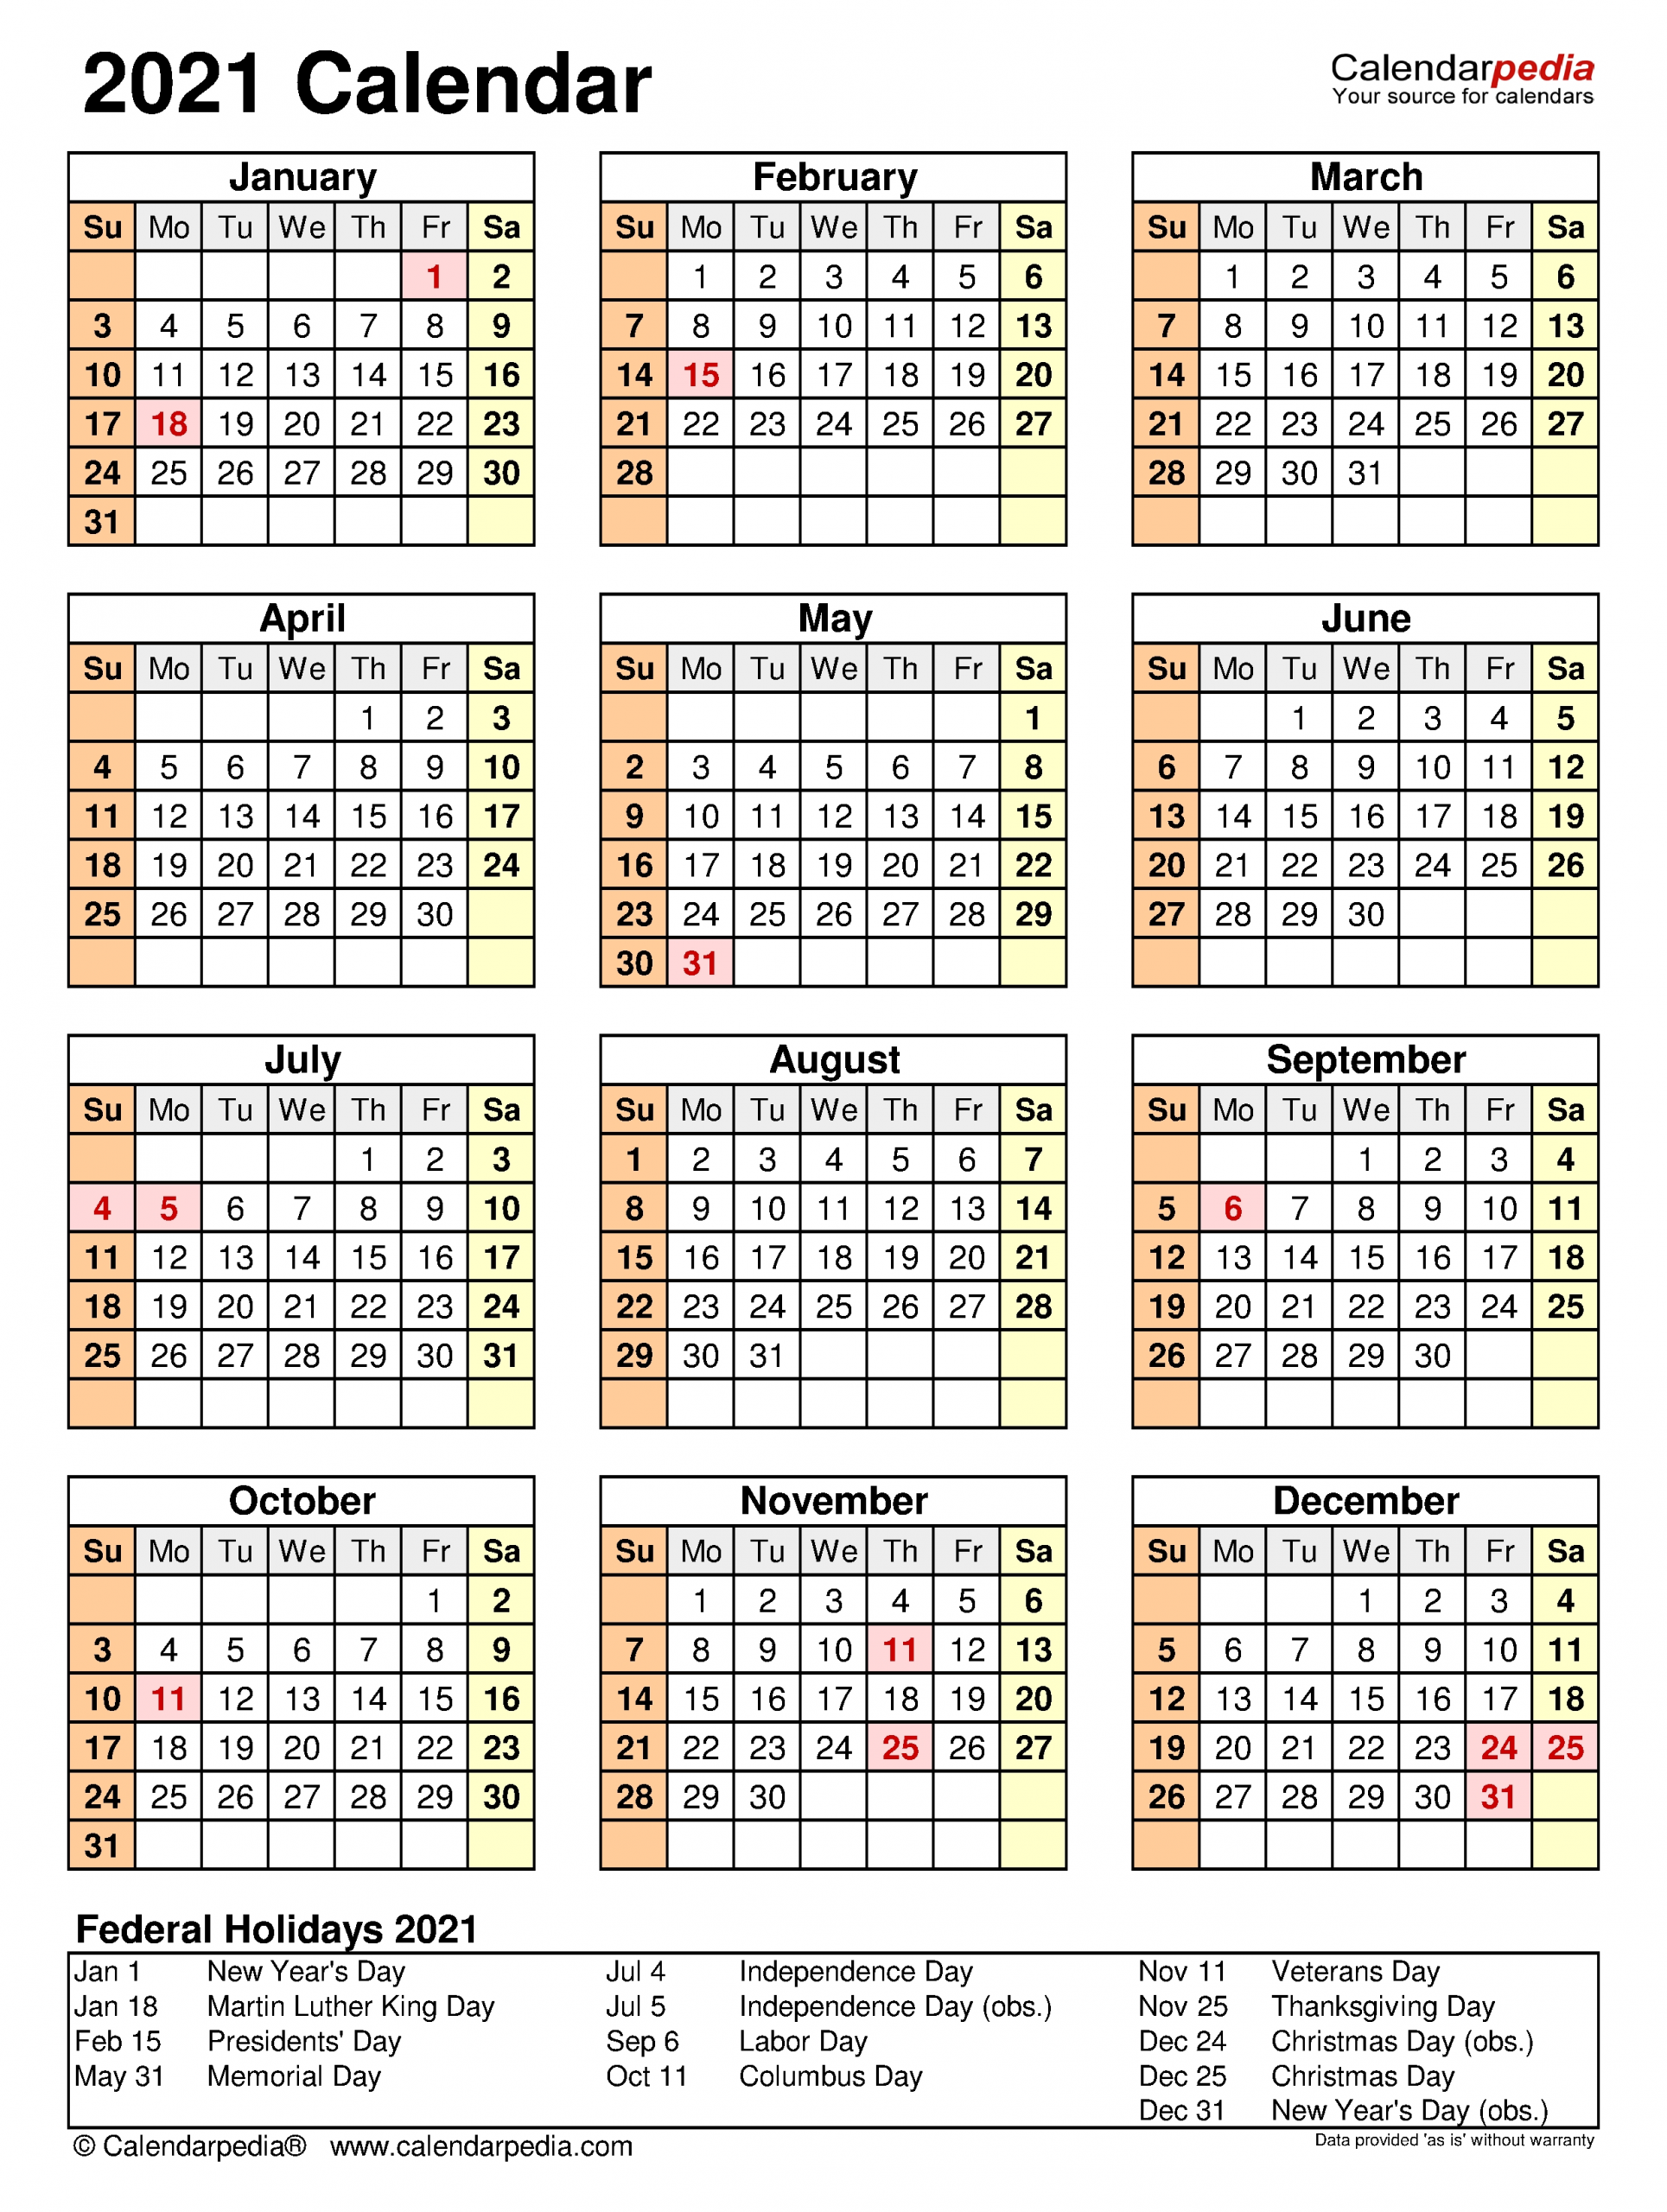 2021 Calendar - Free Printable Excel Templates - Calendarpedia-Excel Holidays 2021 List